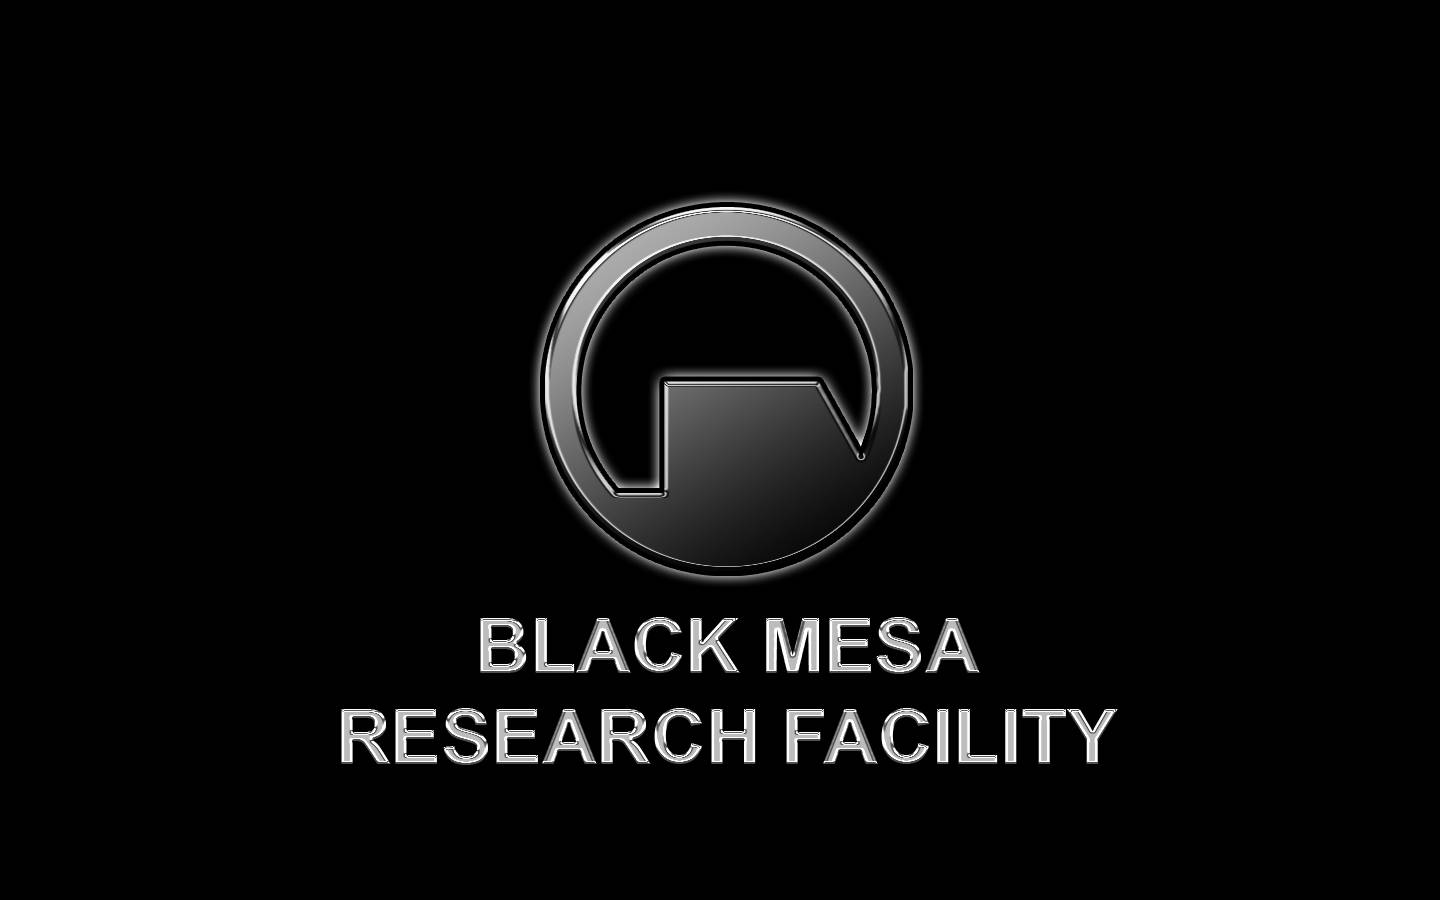 Black Mesa Wallpaper